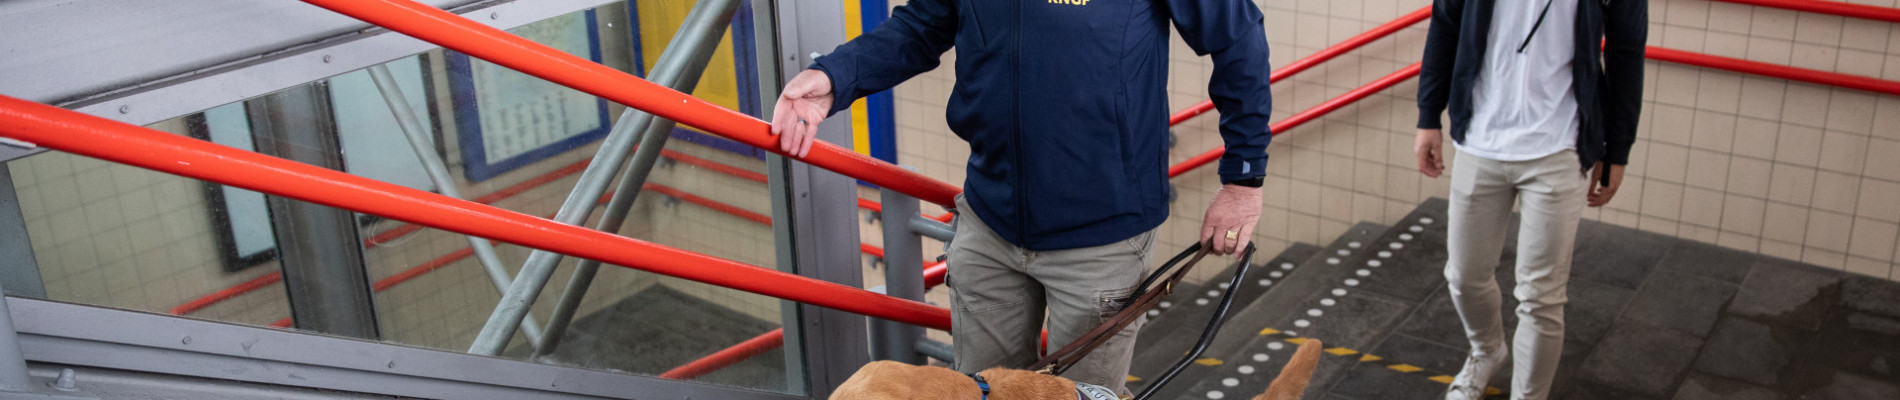 Instructeur Kees loopt met labrador in paars kngf-tuig op de trap in een metrostation